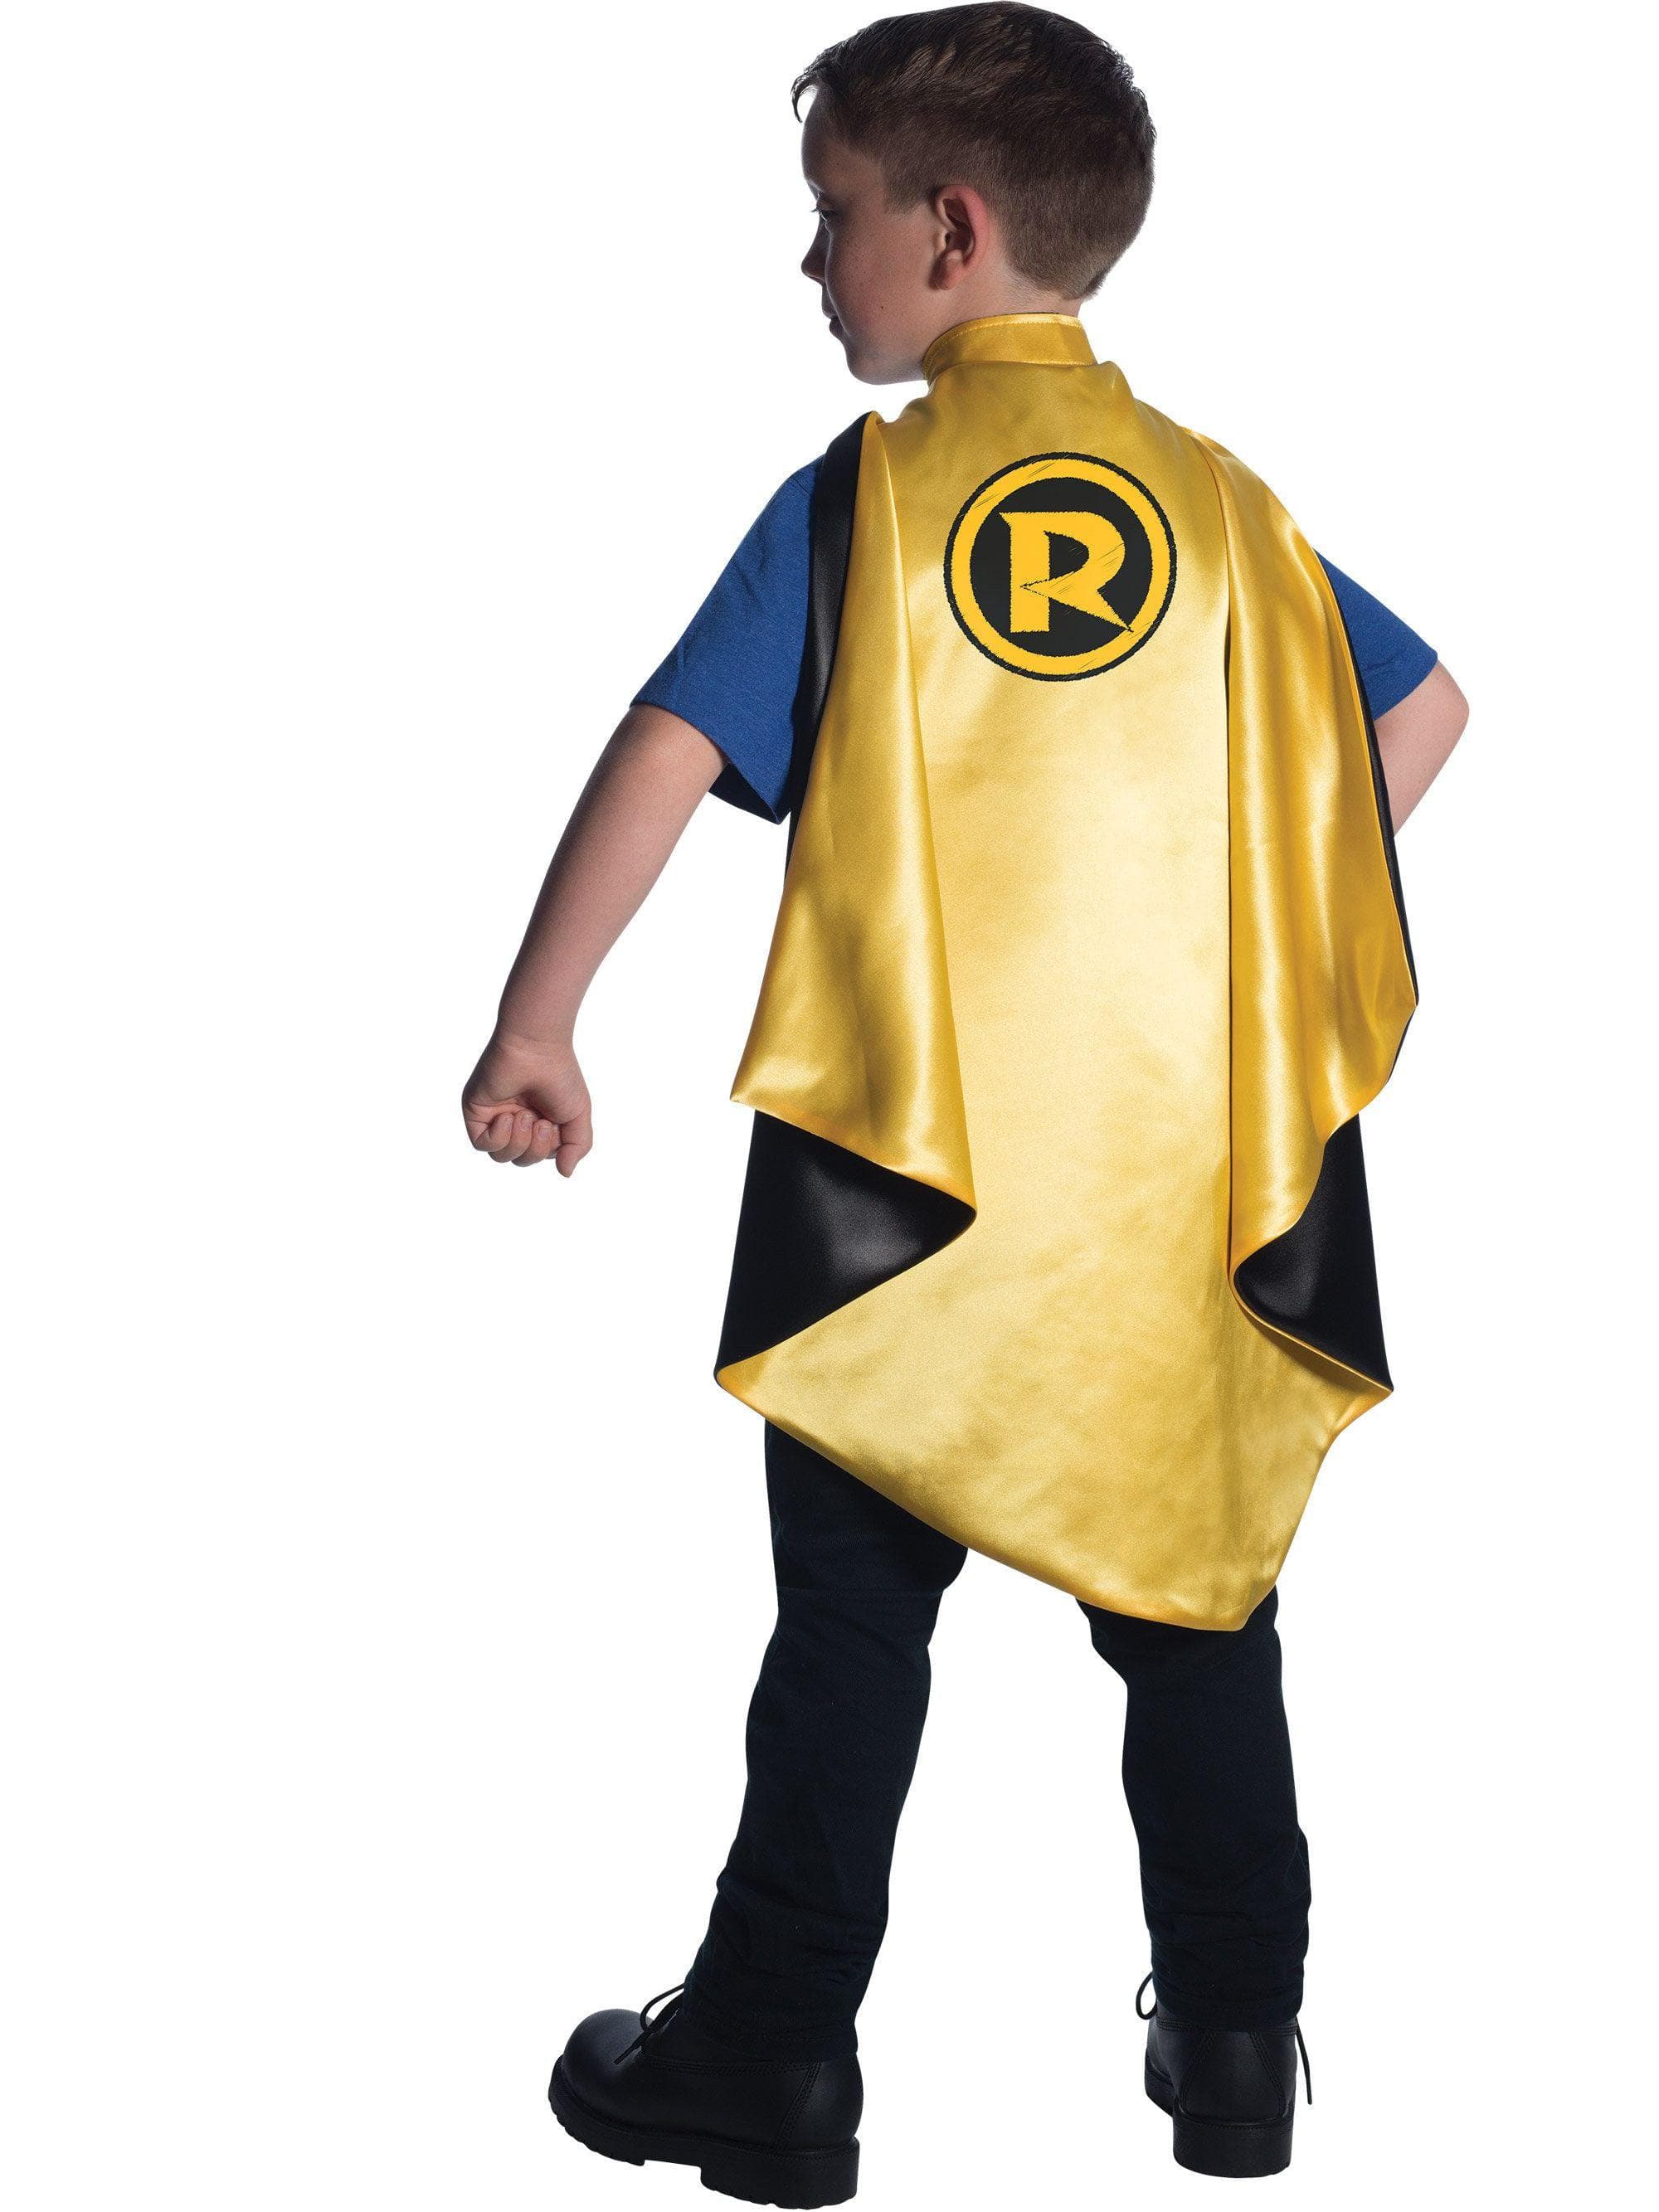 Kids' Black and Yellow DC Comics Robin Cape - costumes.com